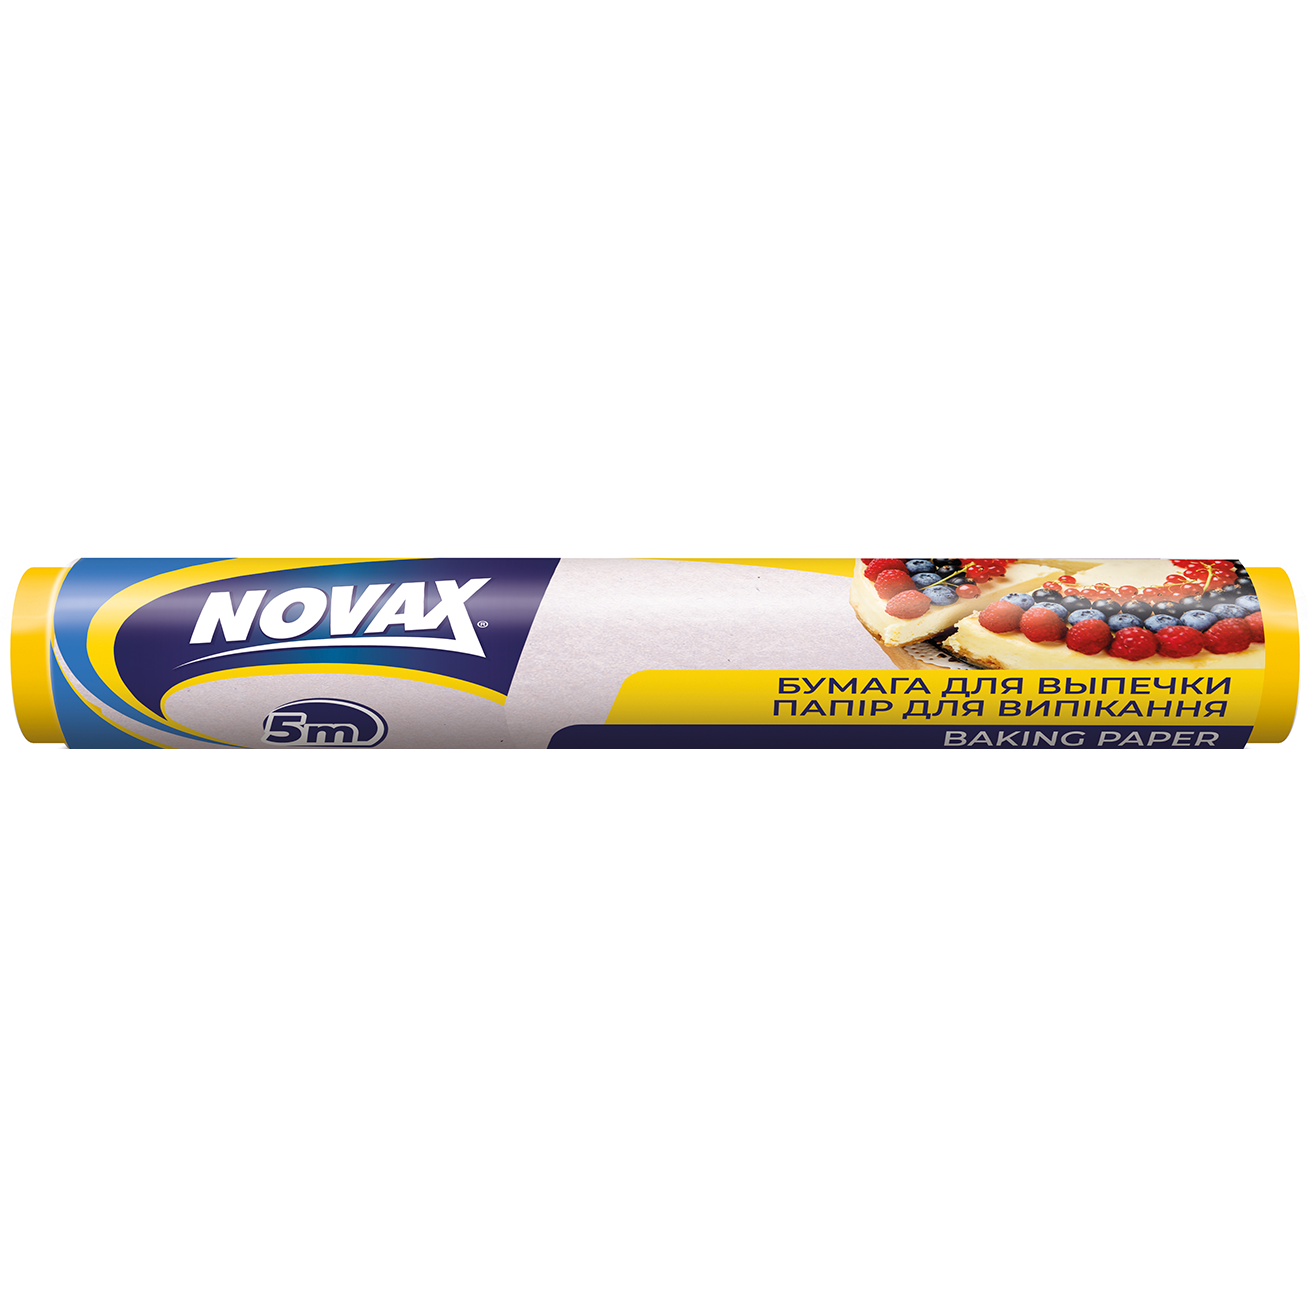 Бумага для выпечки Novax, 5 м - фото 1